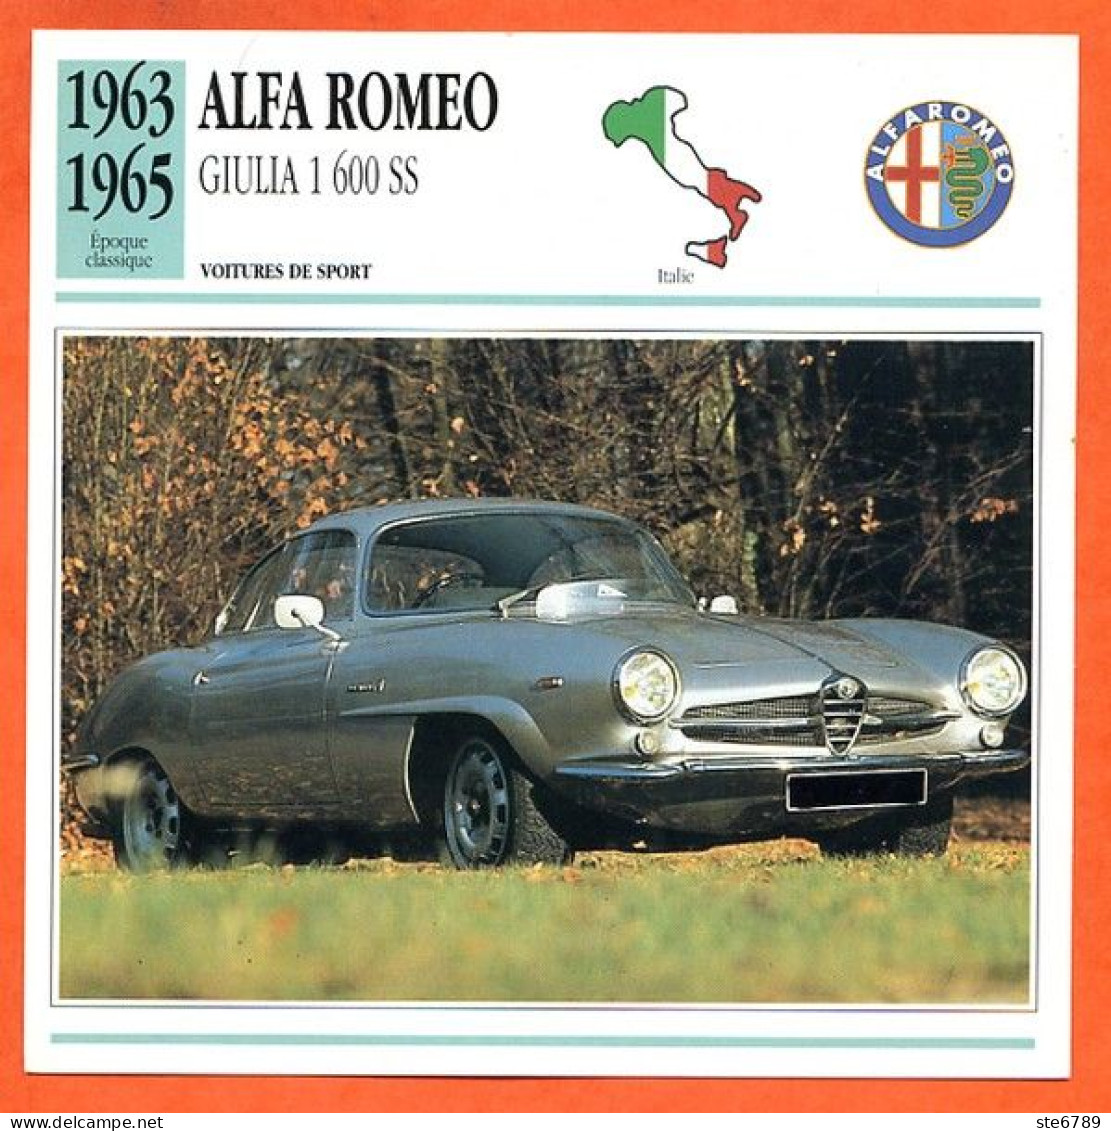 ALFA ROMEO GIULIA 1600 S 1963 Voiture De Sport Italie Fiche Technique Automobile - Autos